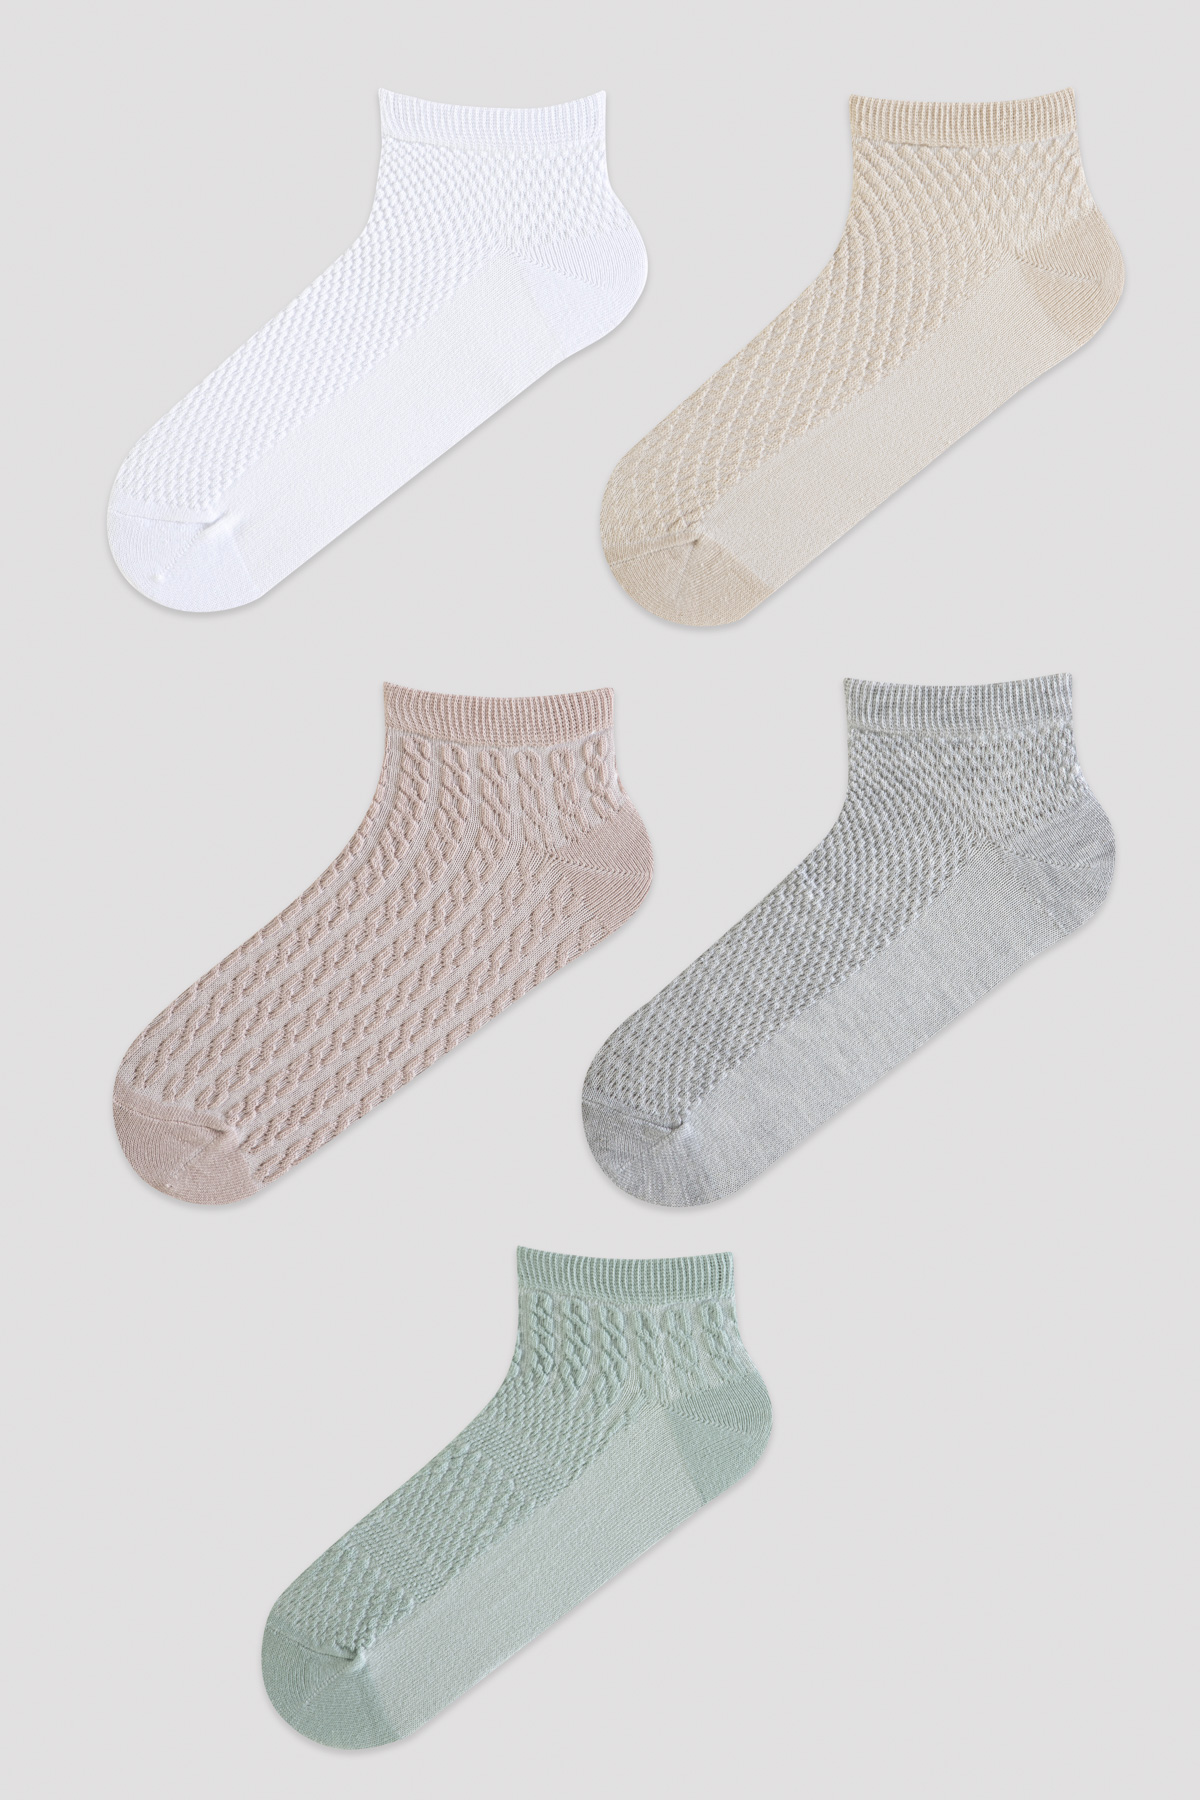 Penti Multi Colour Jaquard 5in1 Liner Socks. 1